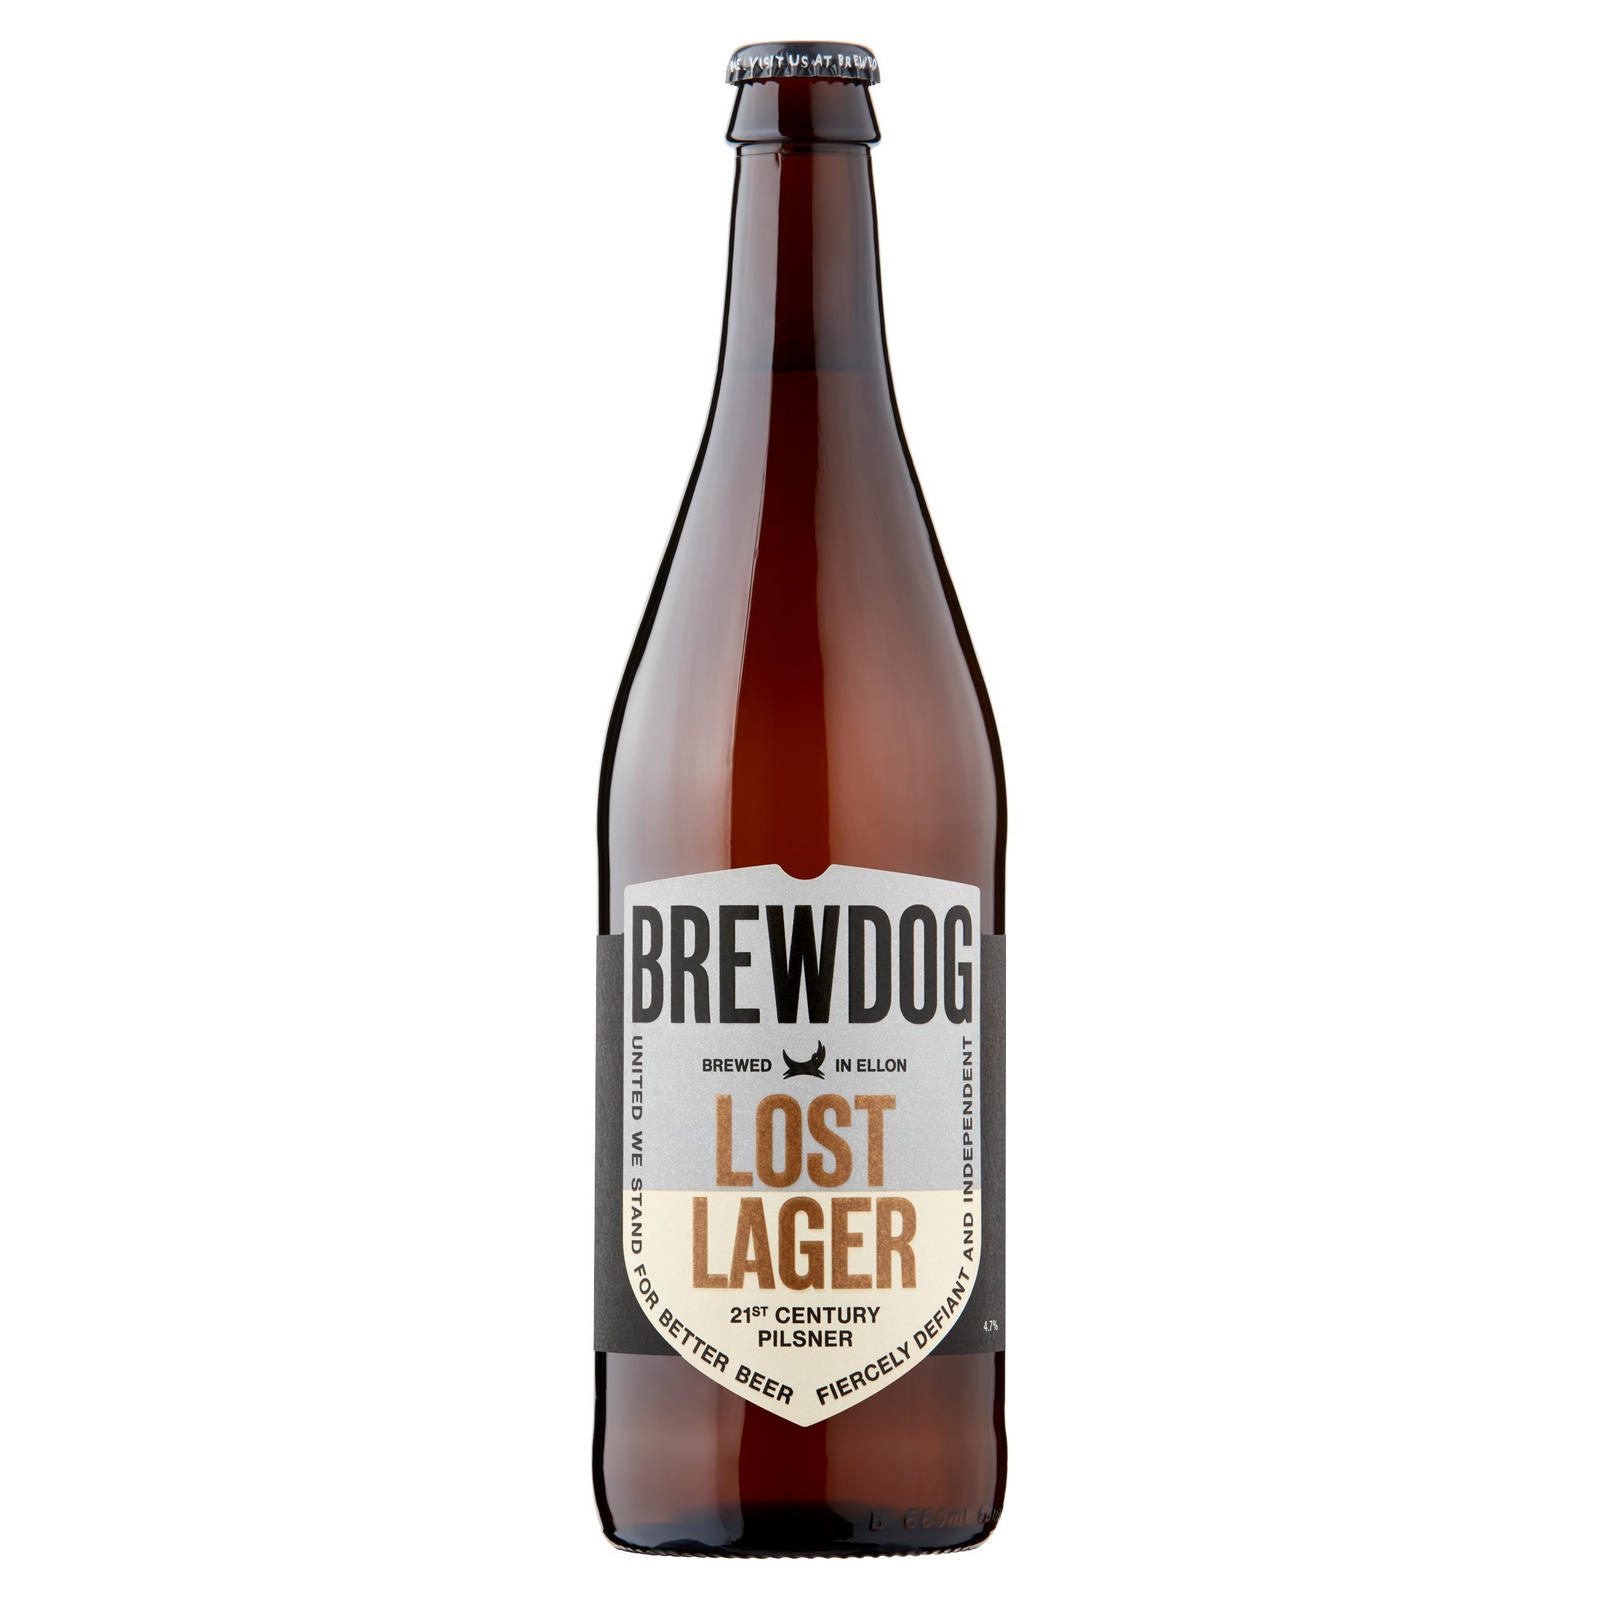 BrewDog Lost Lager 21st Century Pilsner 660ml | Beer | Iceland Foods